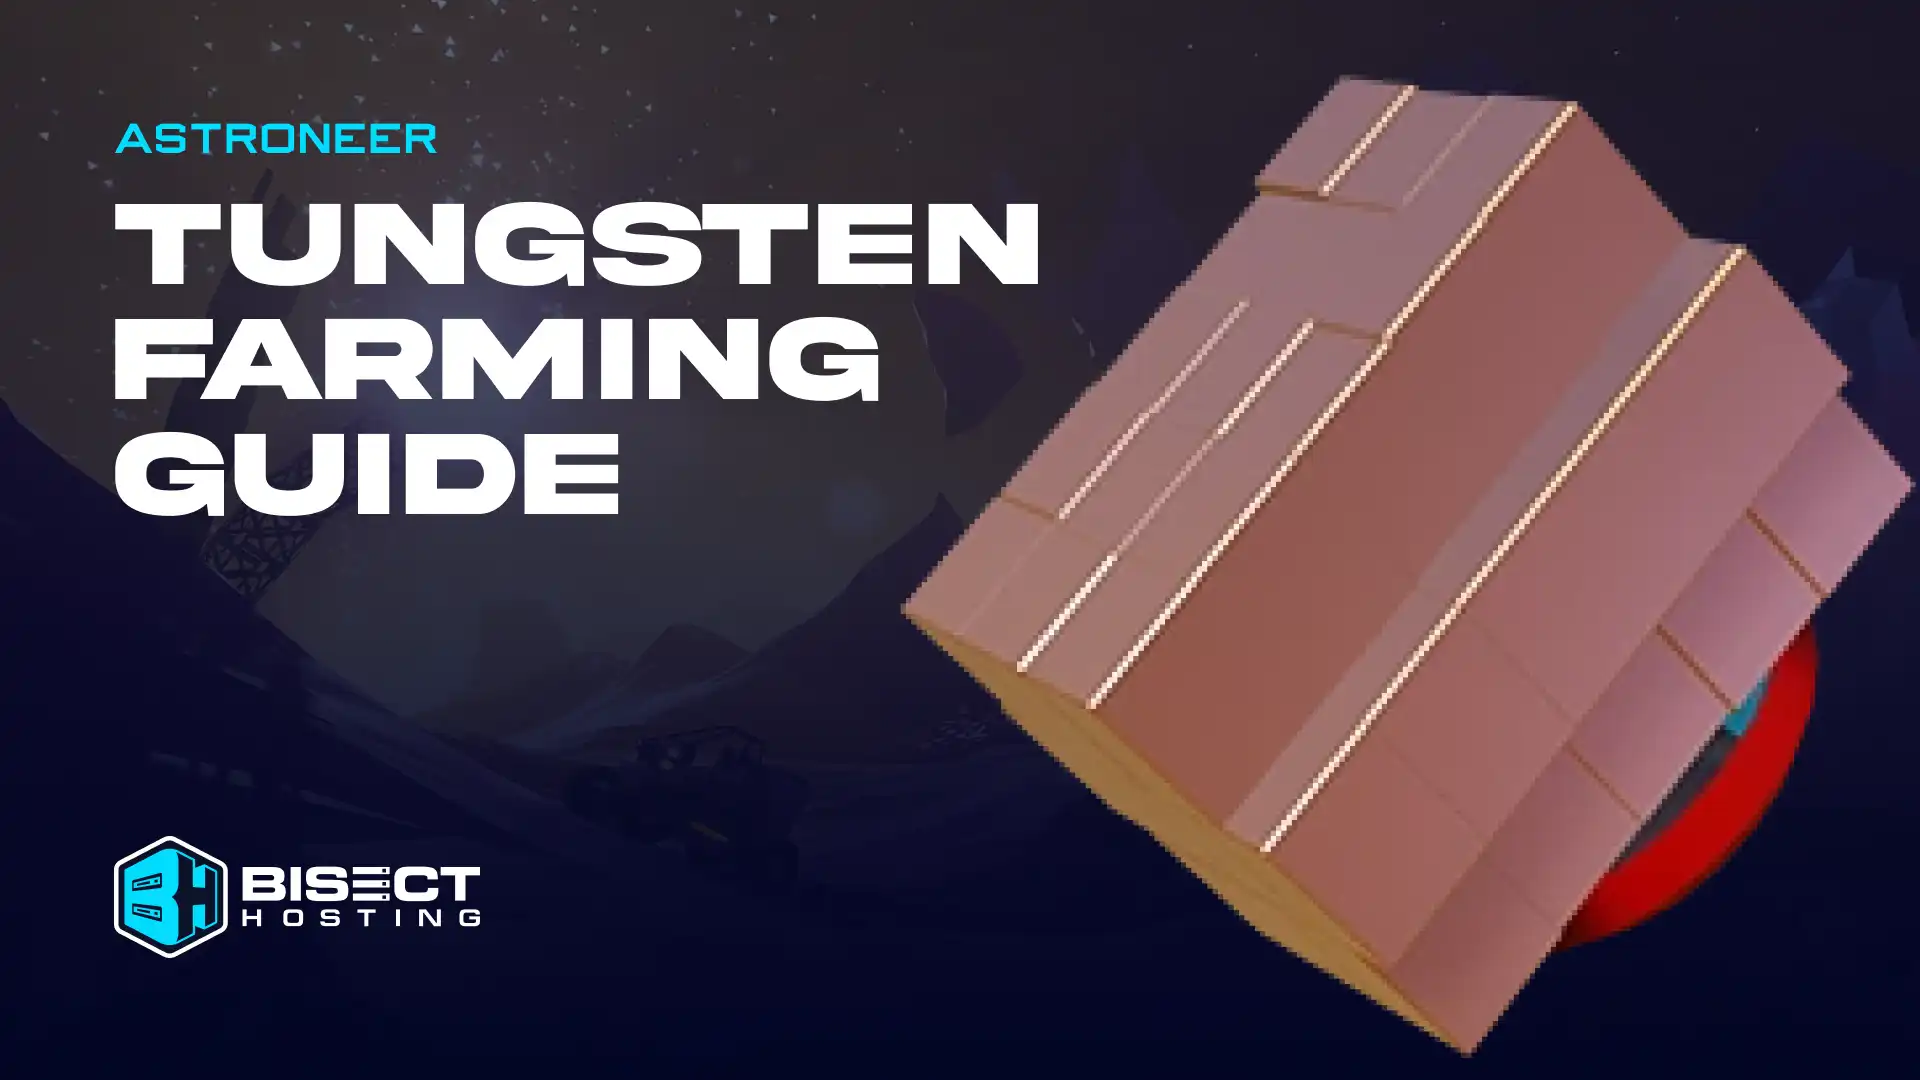 Astroneer Tungsten Farming Guide